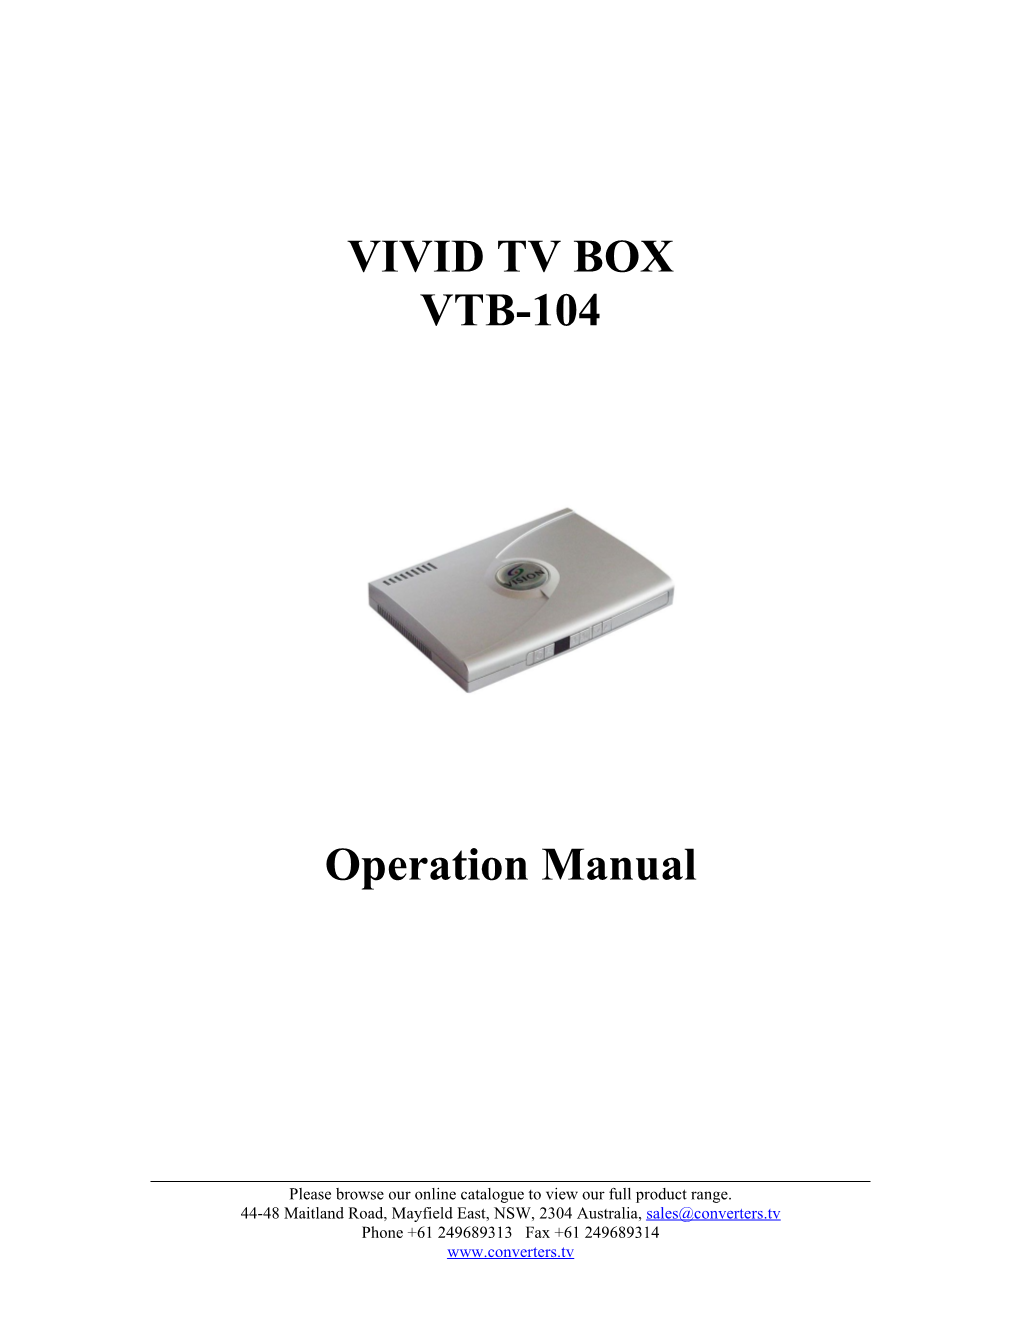 Vivid Tv Box Vtb-104